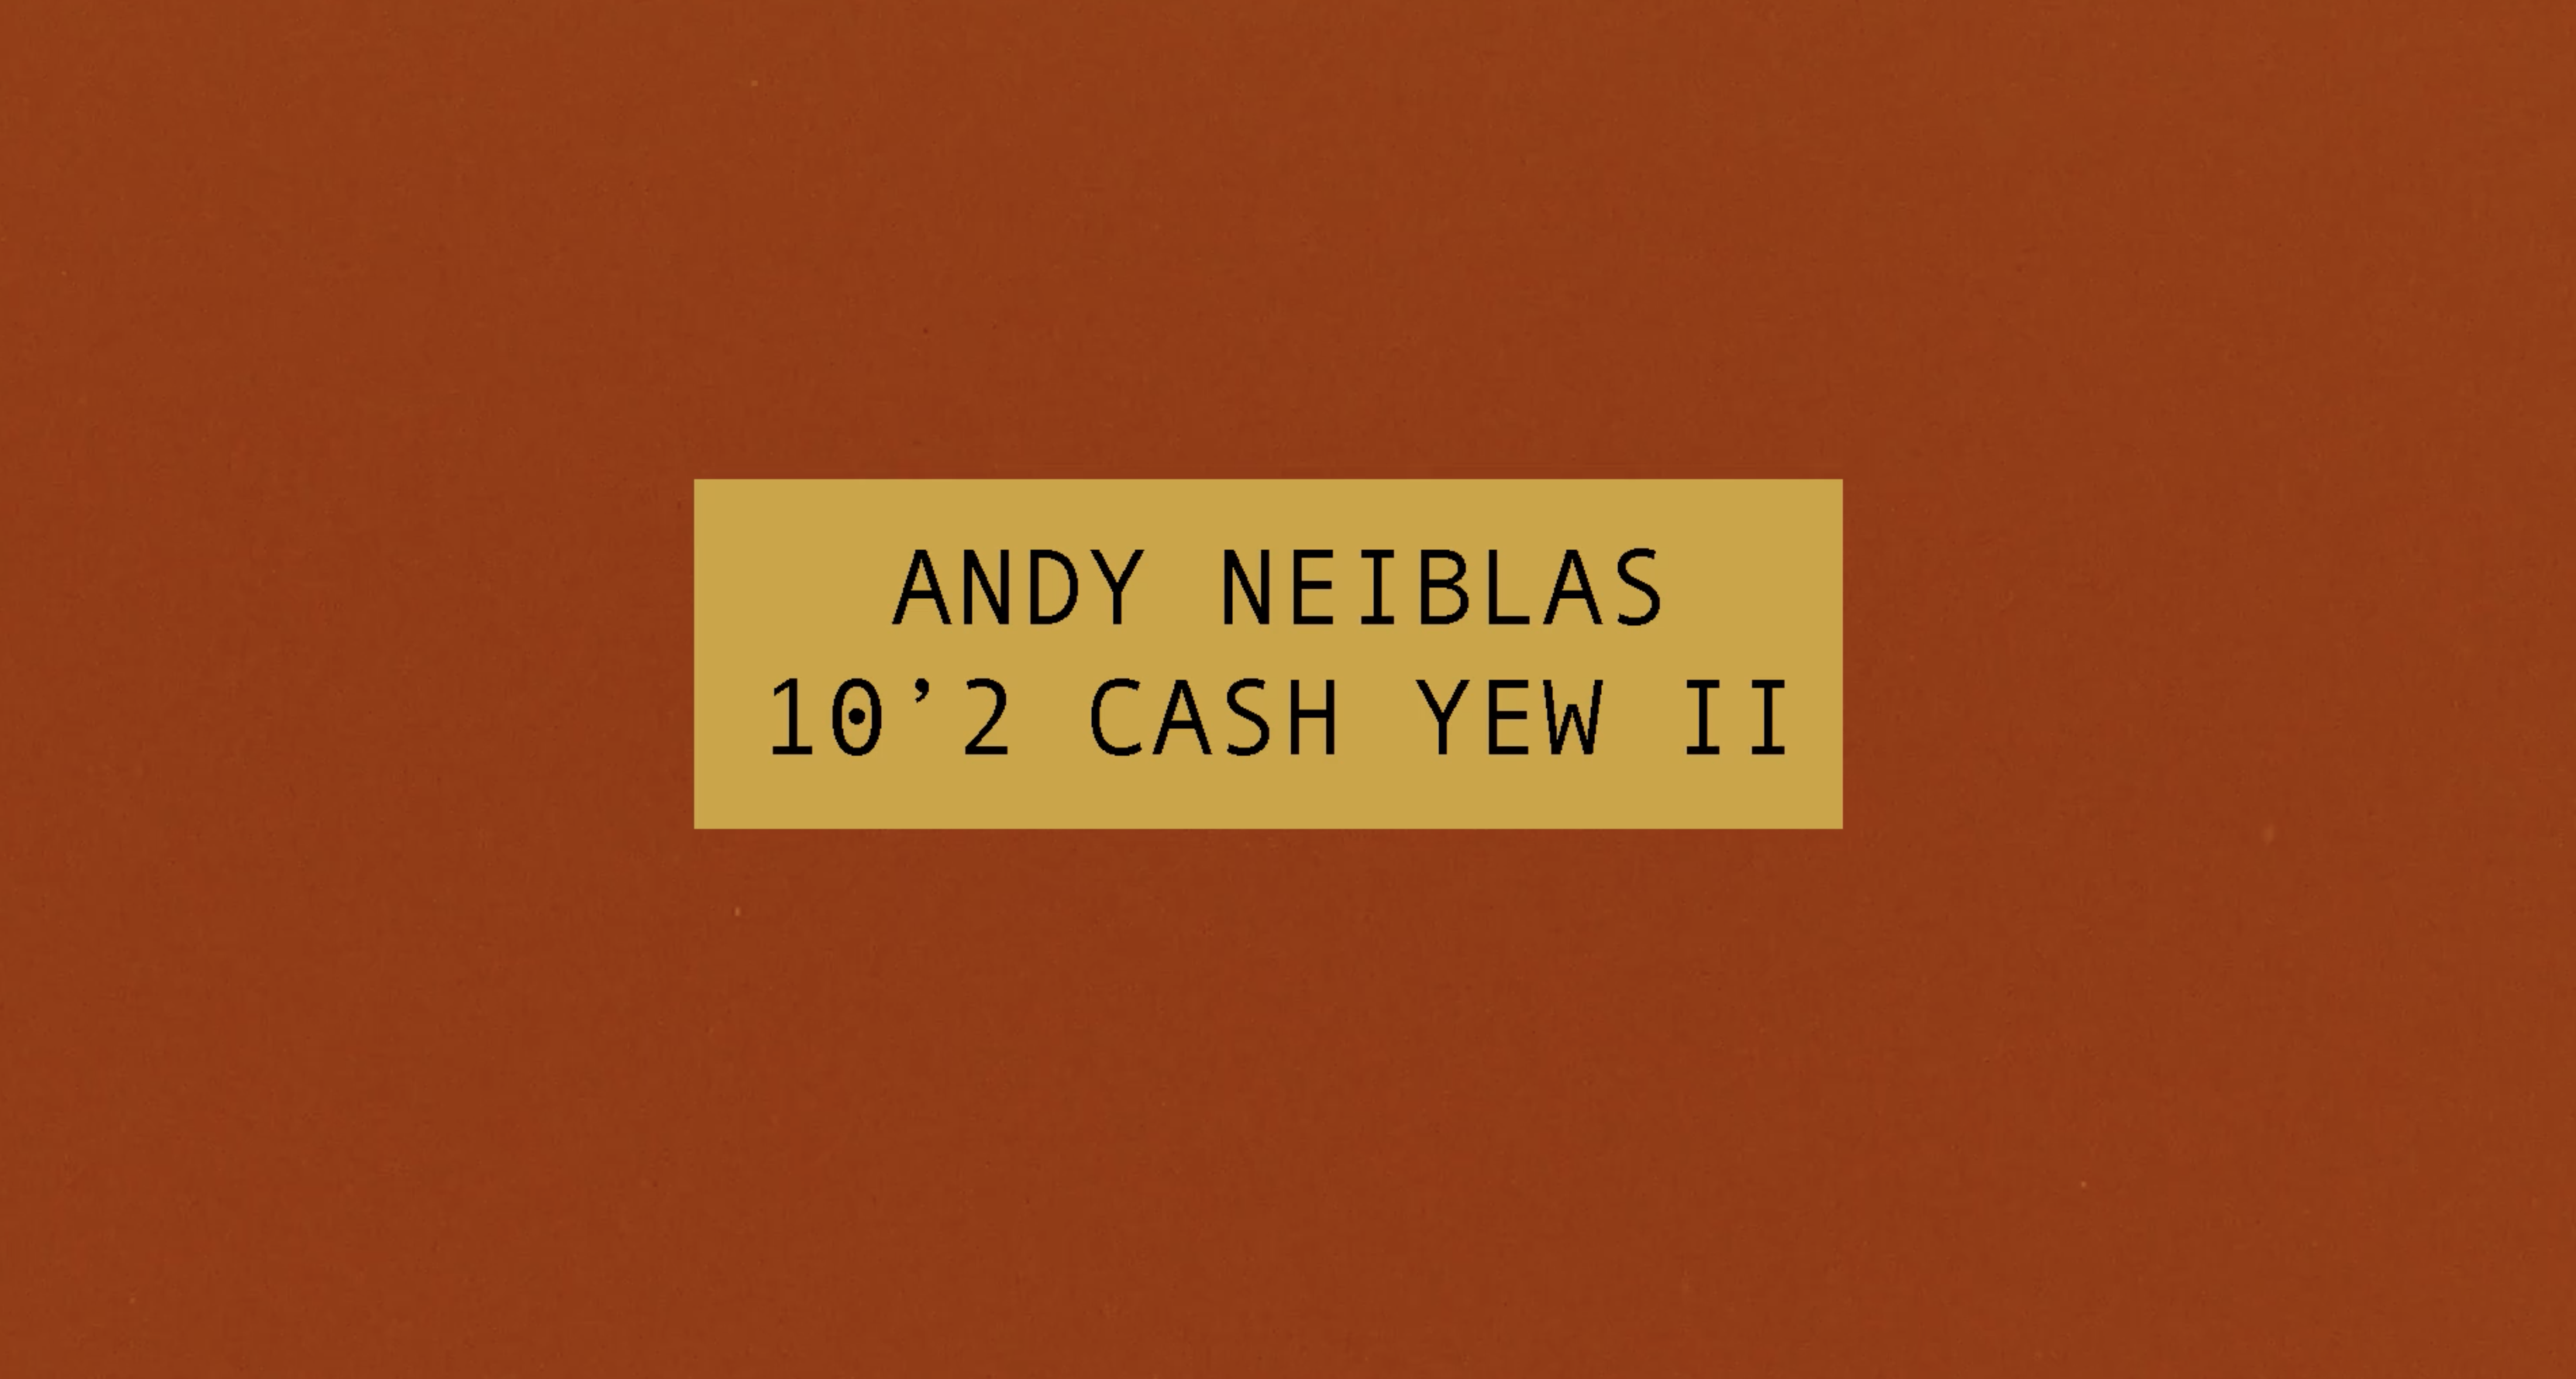 Andy Nieblas 10'2 Cash-Yew II